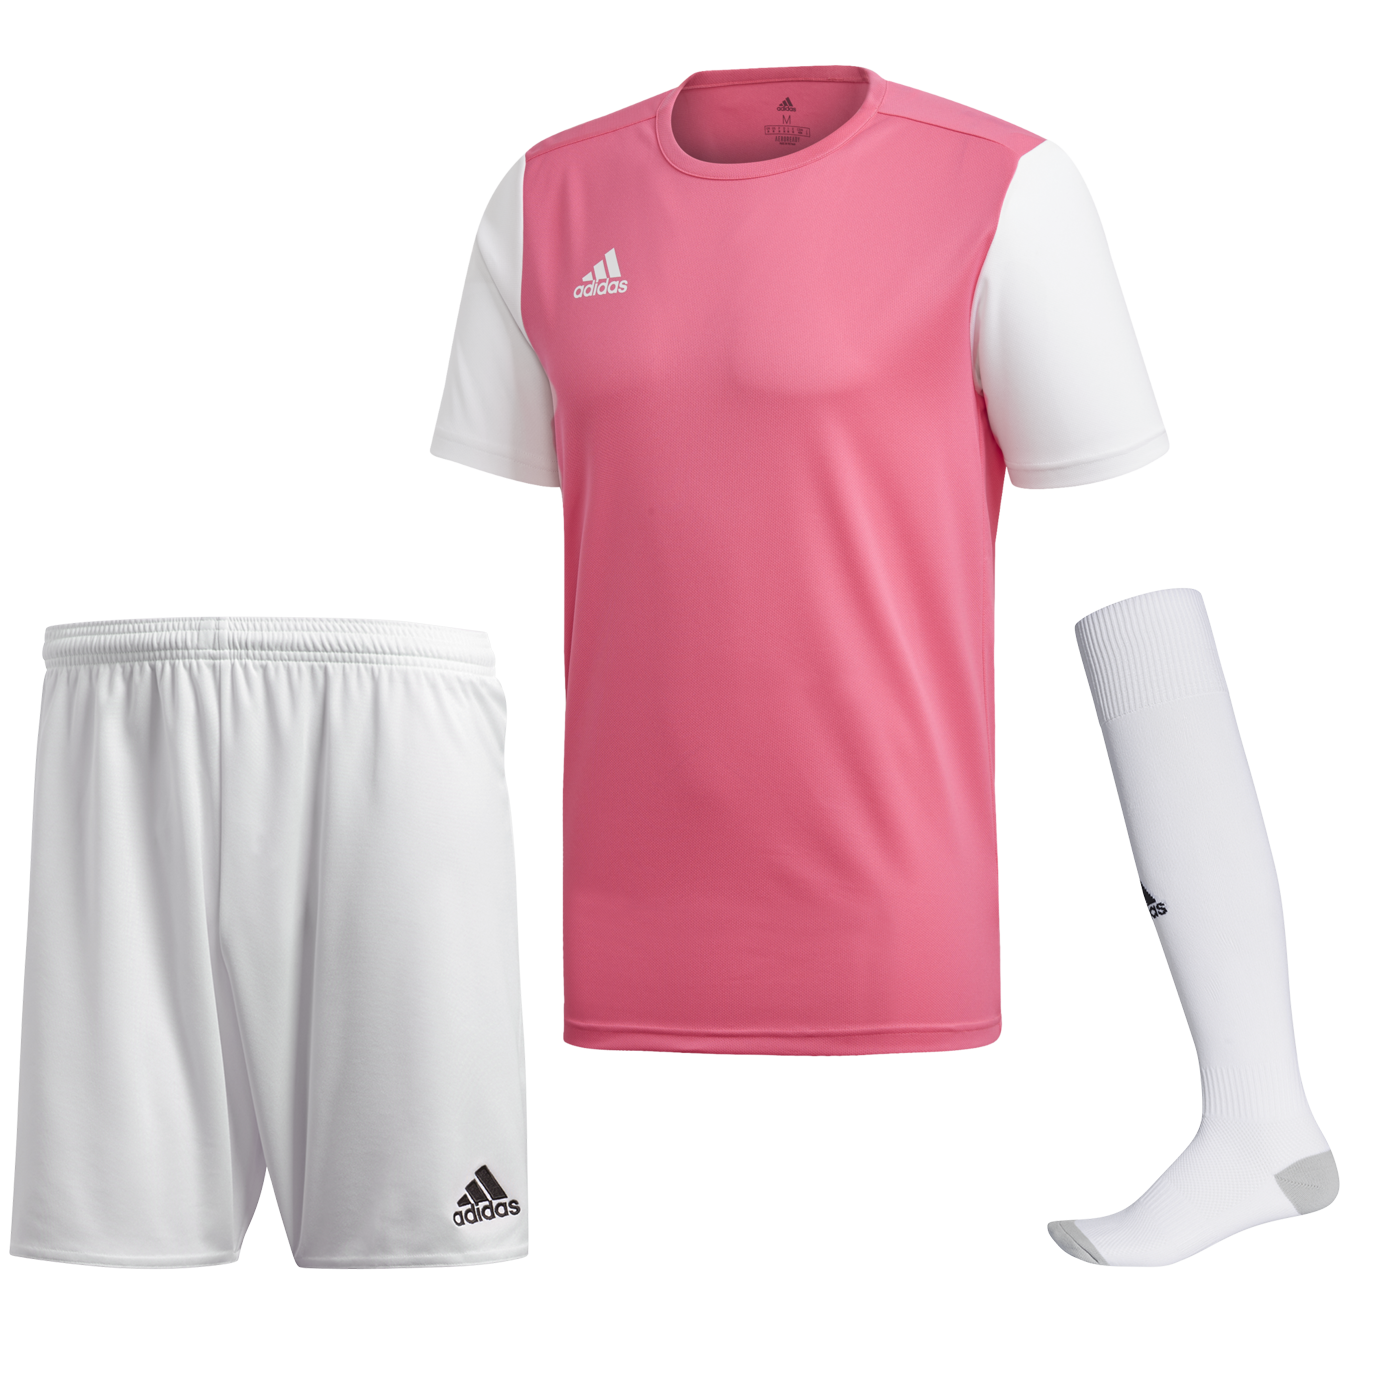 Adidas Estro 19 růžová/bílá UK S Pánské